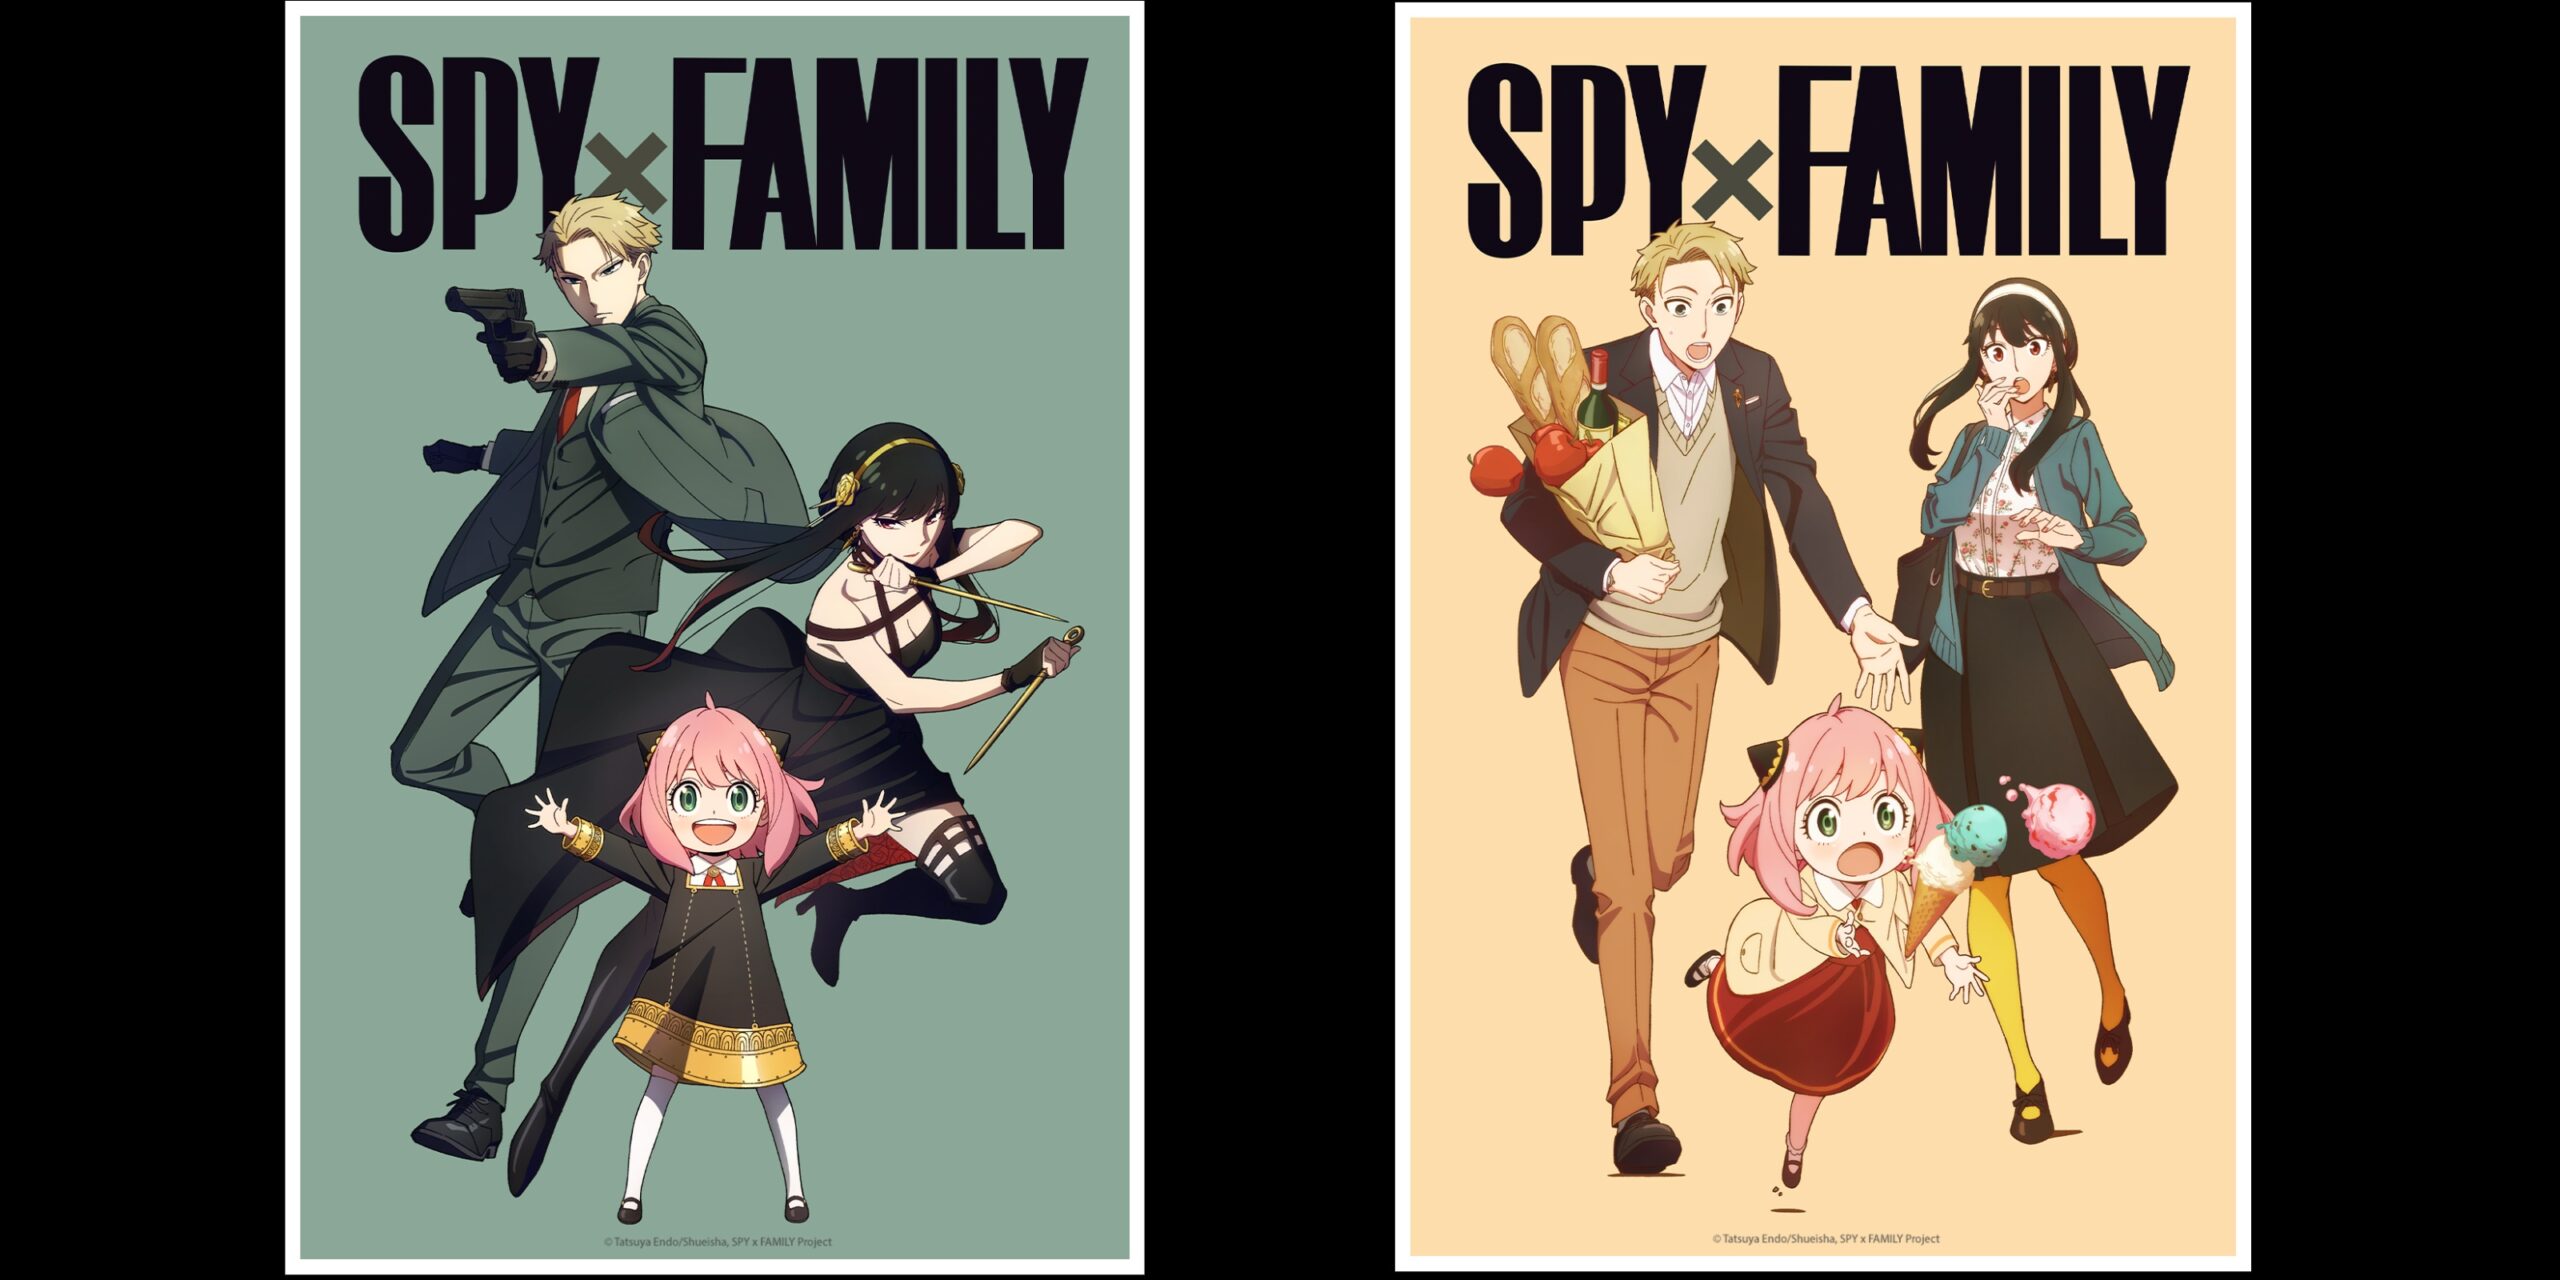 Spy x Family anime releases new visual of Anya in a yukata